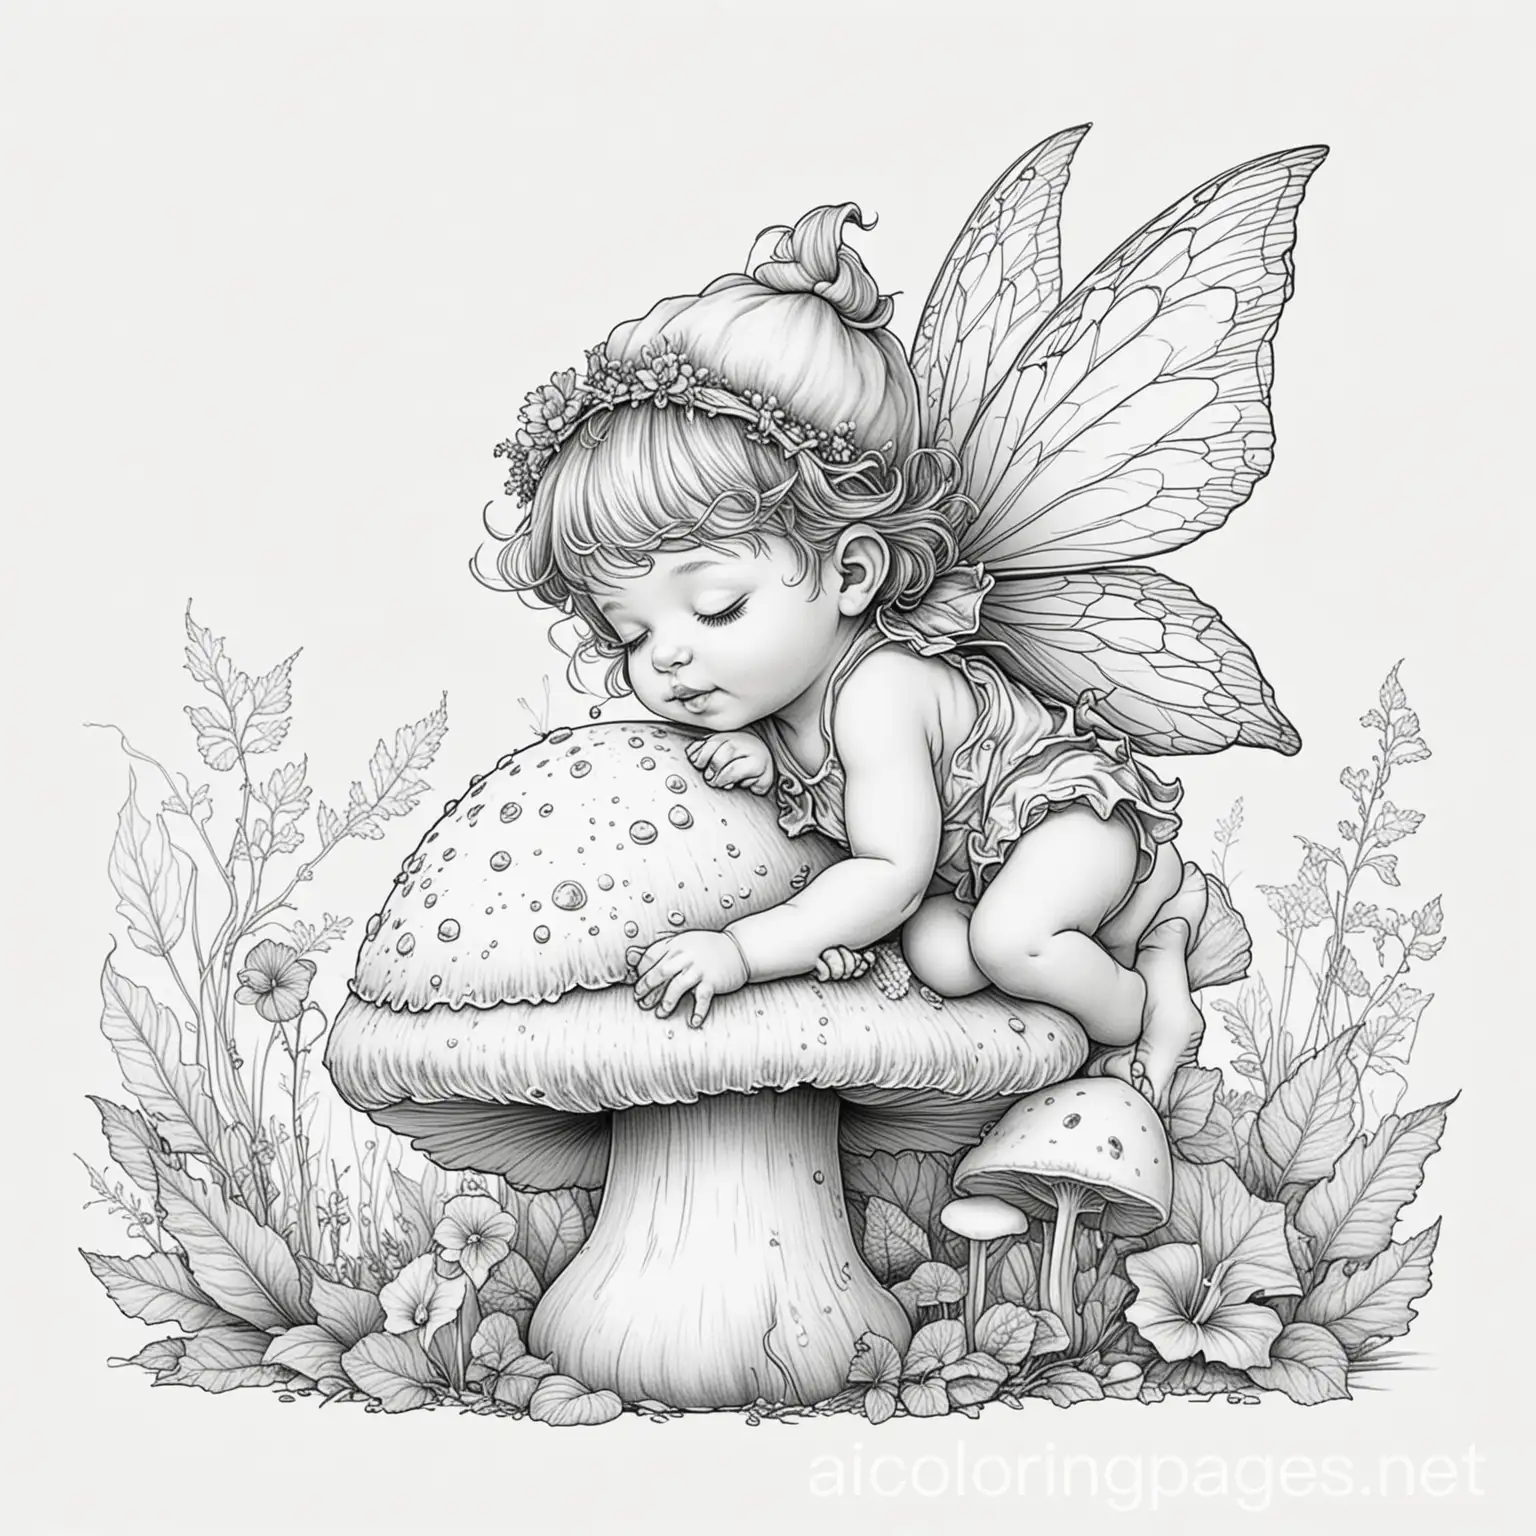 Baby-Fairy-Sleeping-on-Mushroom-Coloring-Page